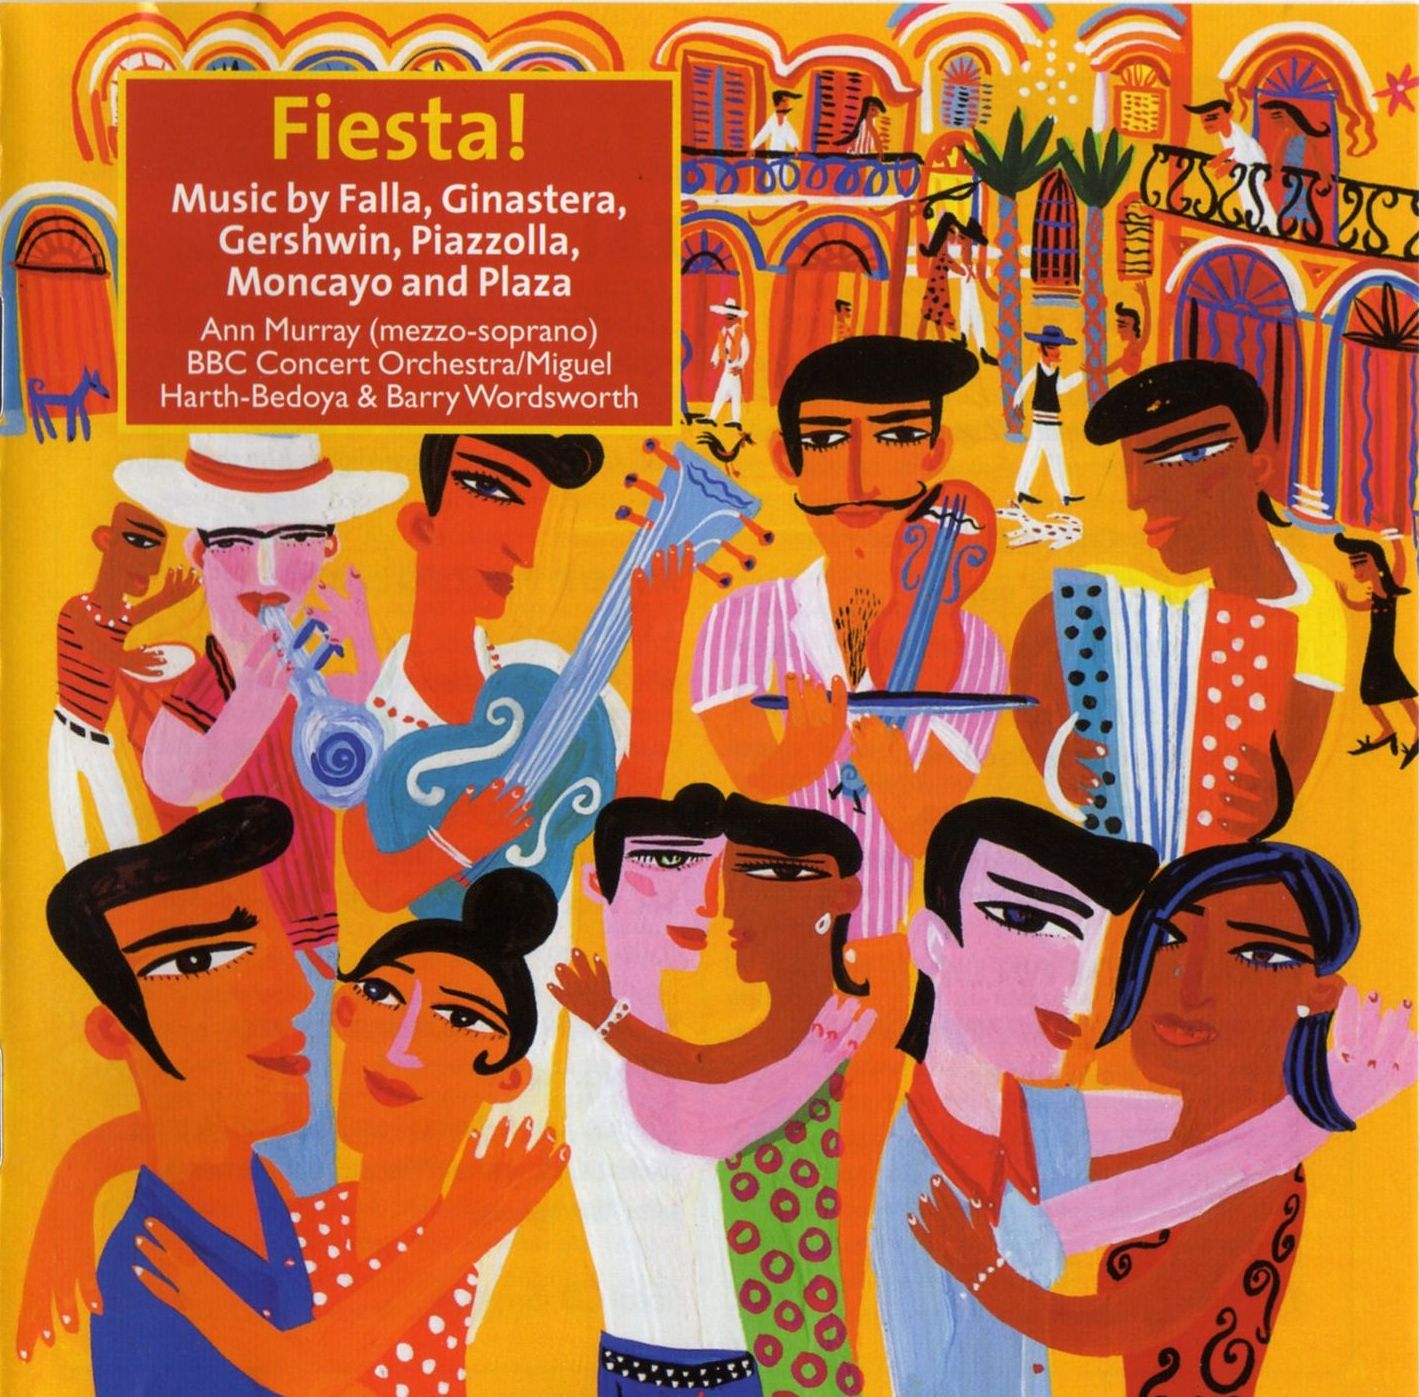 Astor Piazzolla De Falla - BBC Music Vol 11 No 6 - Fiesta